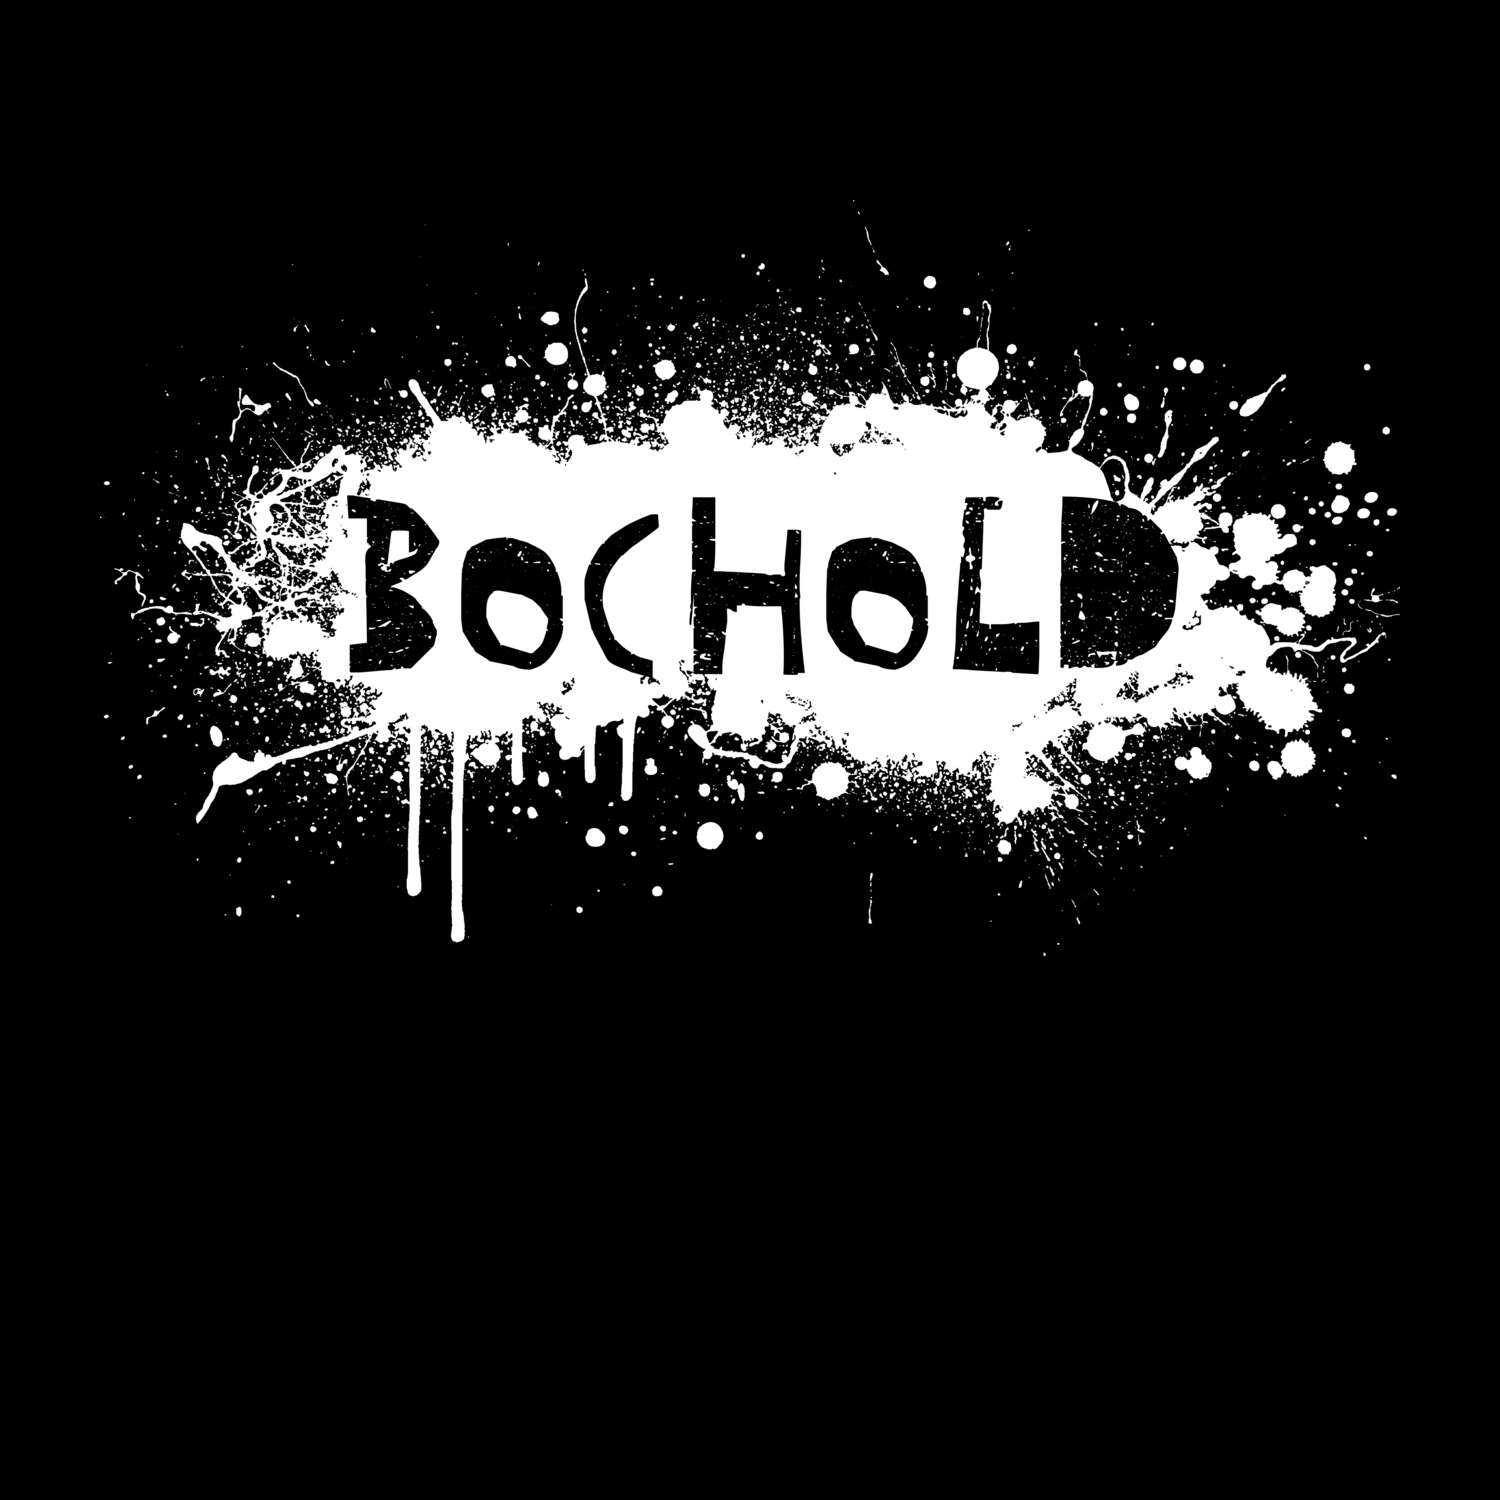 Bochold T-Shirt »Paint Splash Punk«